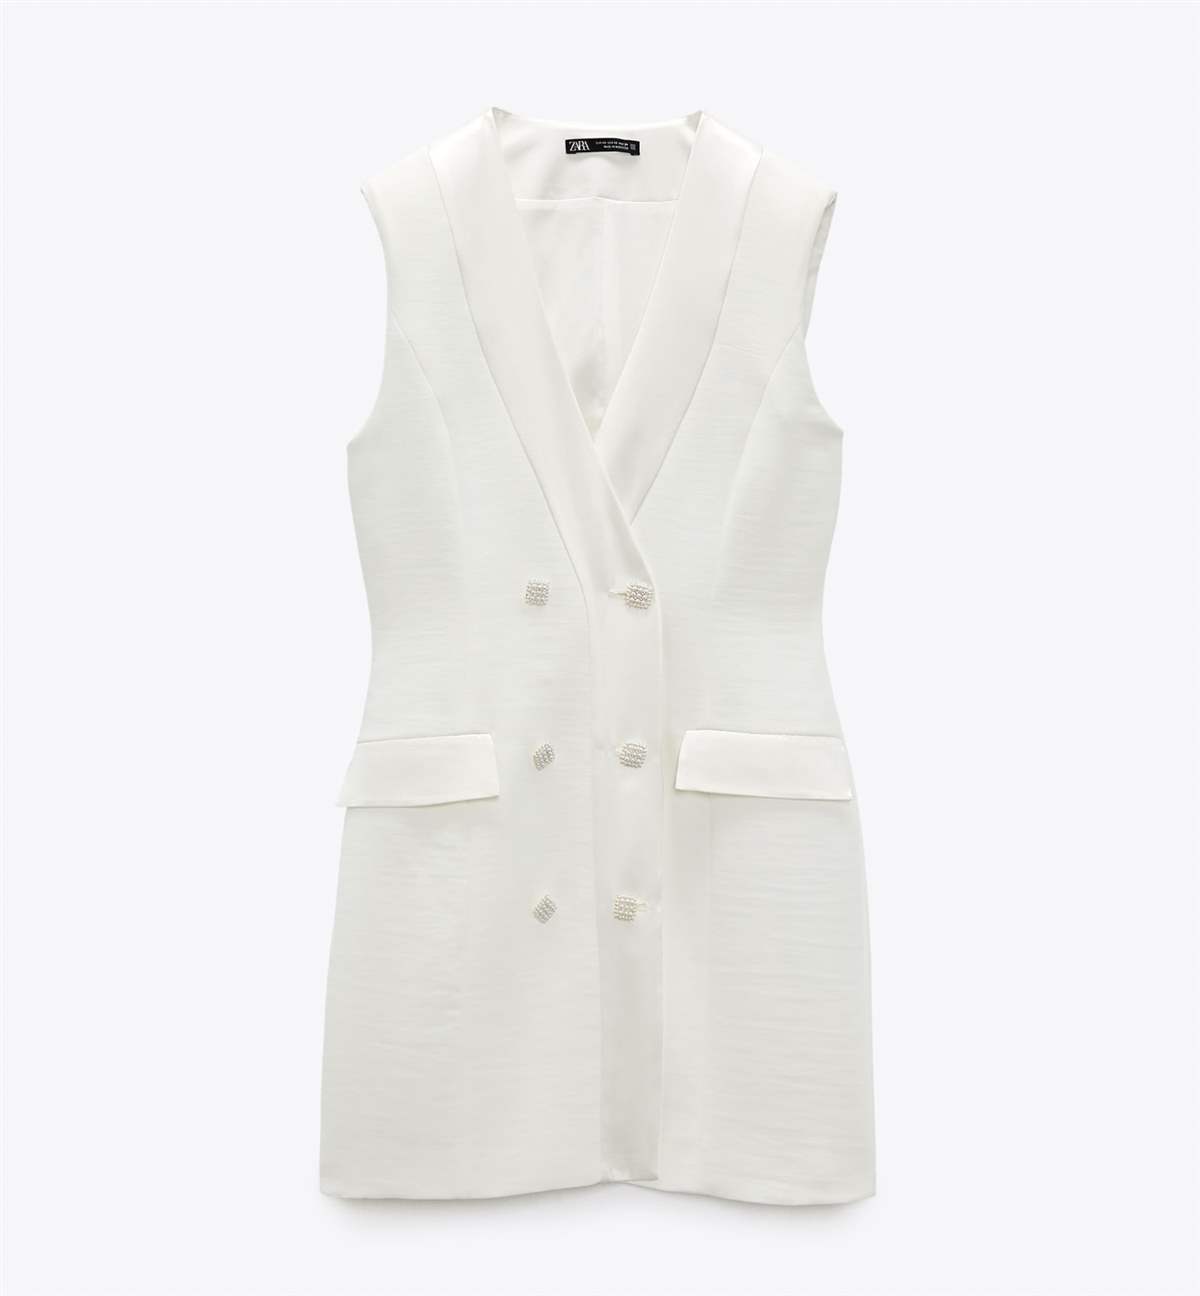 Vestido chaleco blanco de Zara